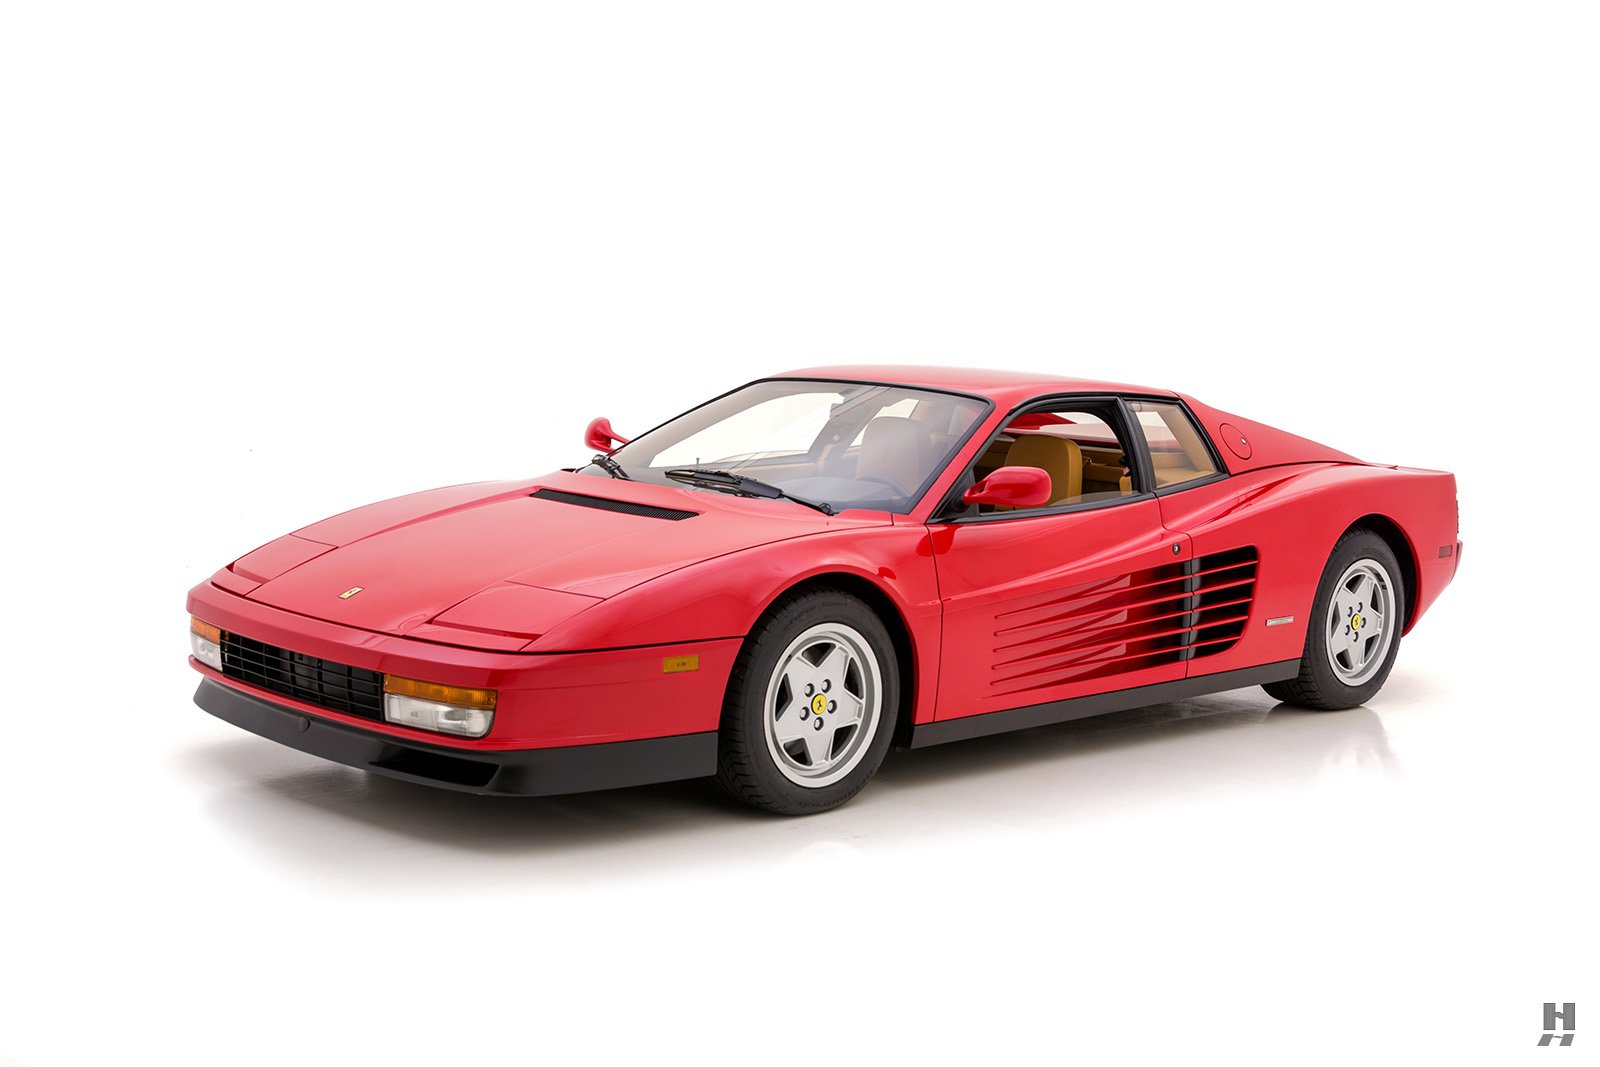 1990 Ferrari Testarossa For Sale | Vintage Driving Machines